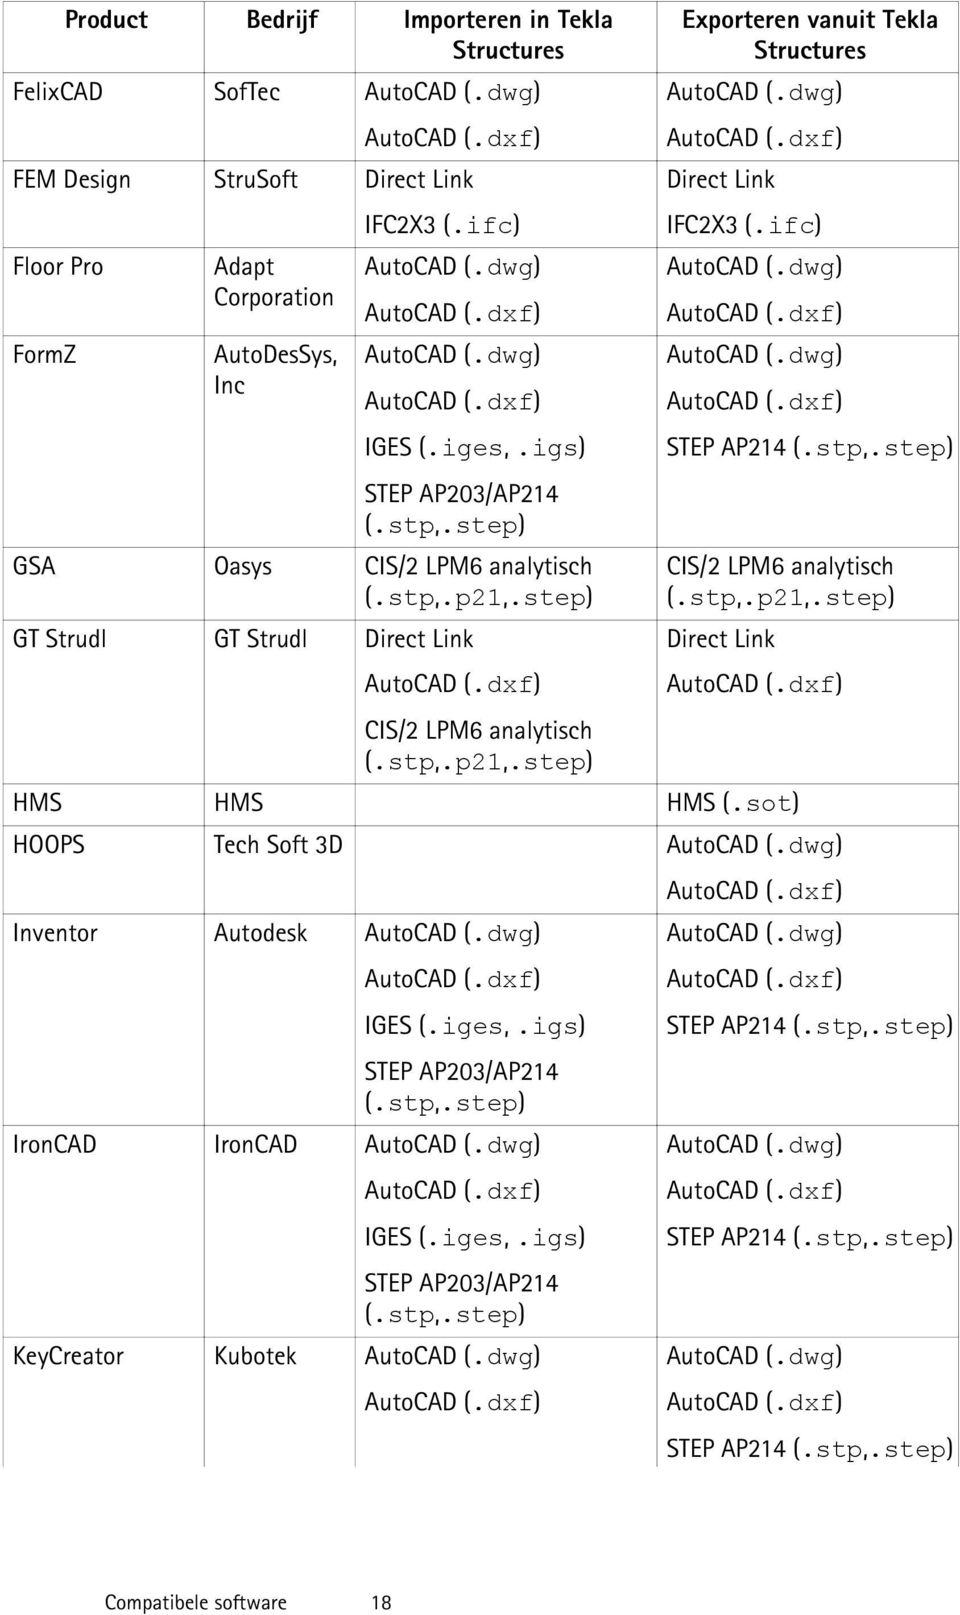 dxf) CIS/2 LPM6 analytisch (.stp,.p21,.step) Exporteren vanuit Tekla Structures AutoCAD (.dwg) AutoCAD (.dxf) Direct Link IFC2X3 (.ifc) AutoCAD (.dwg) AutoCAD (.dxf) AutoCAD (.dwg) AutoCAD (.dxf) STEP AP214 (.